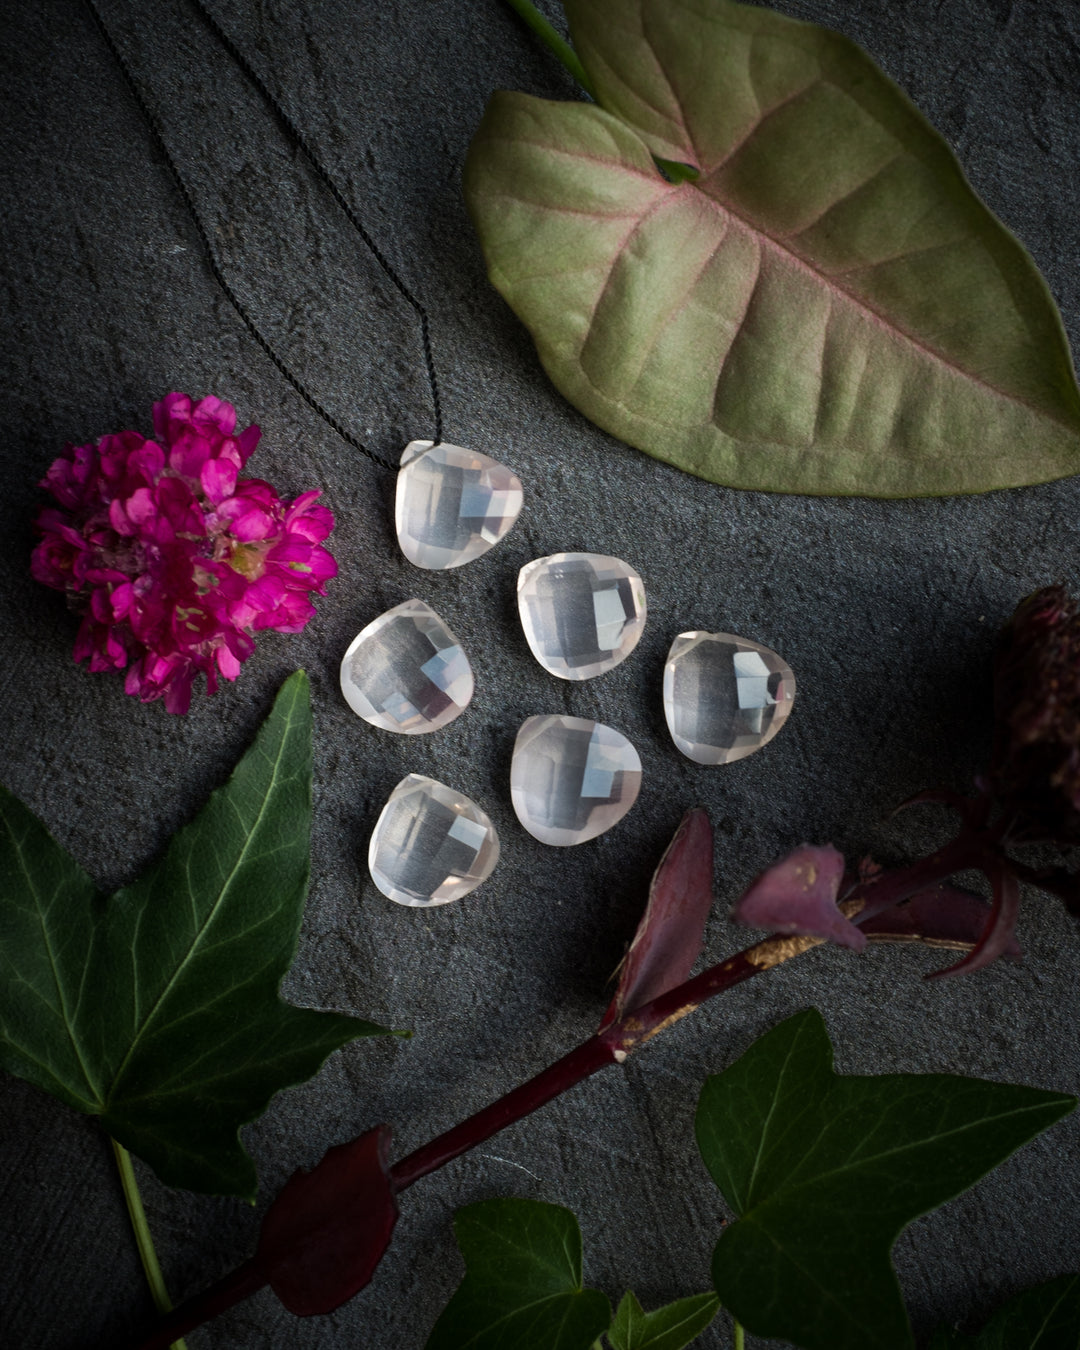 Rose Quartz Vegan Silk Necklace - The Healing Pear